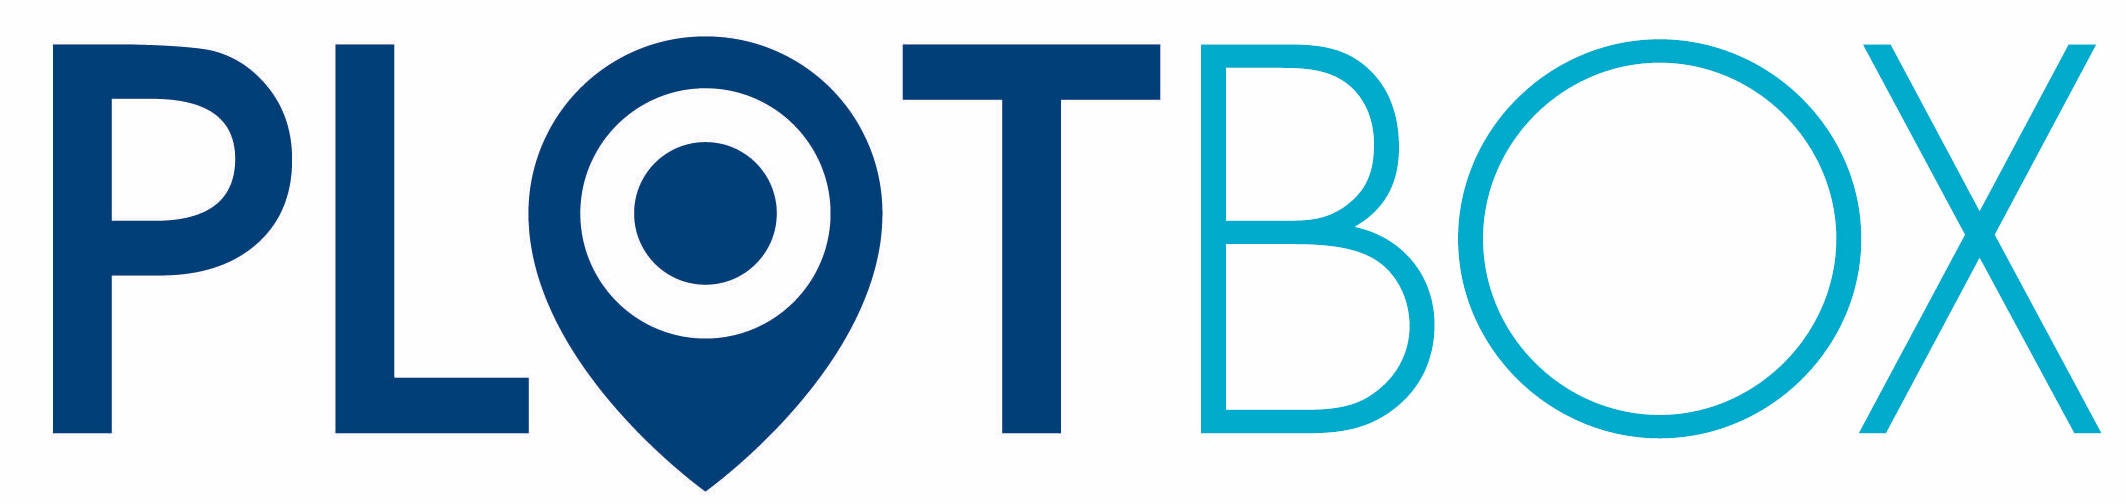 PlotBox Logo 2018